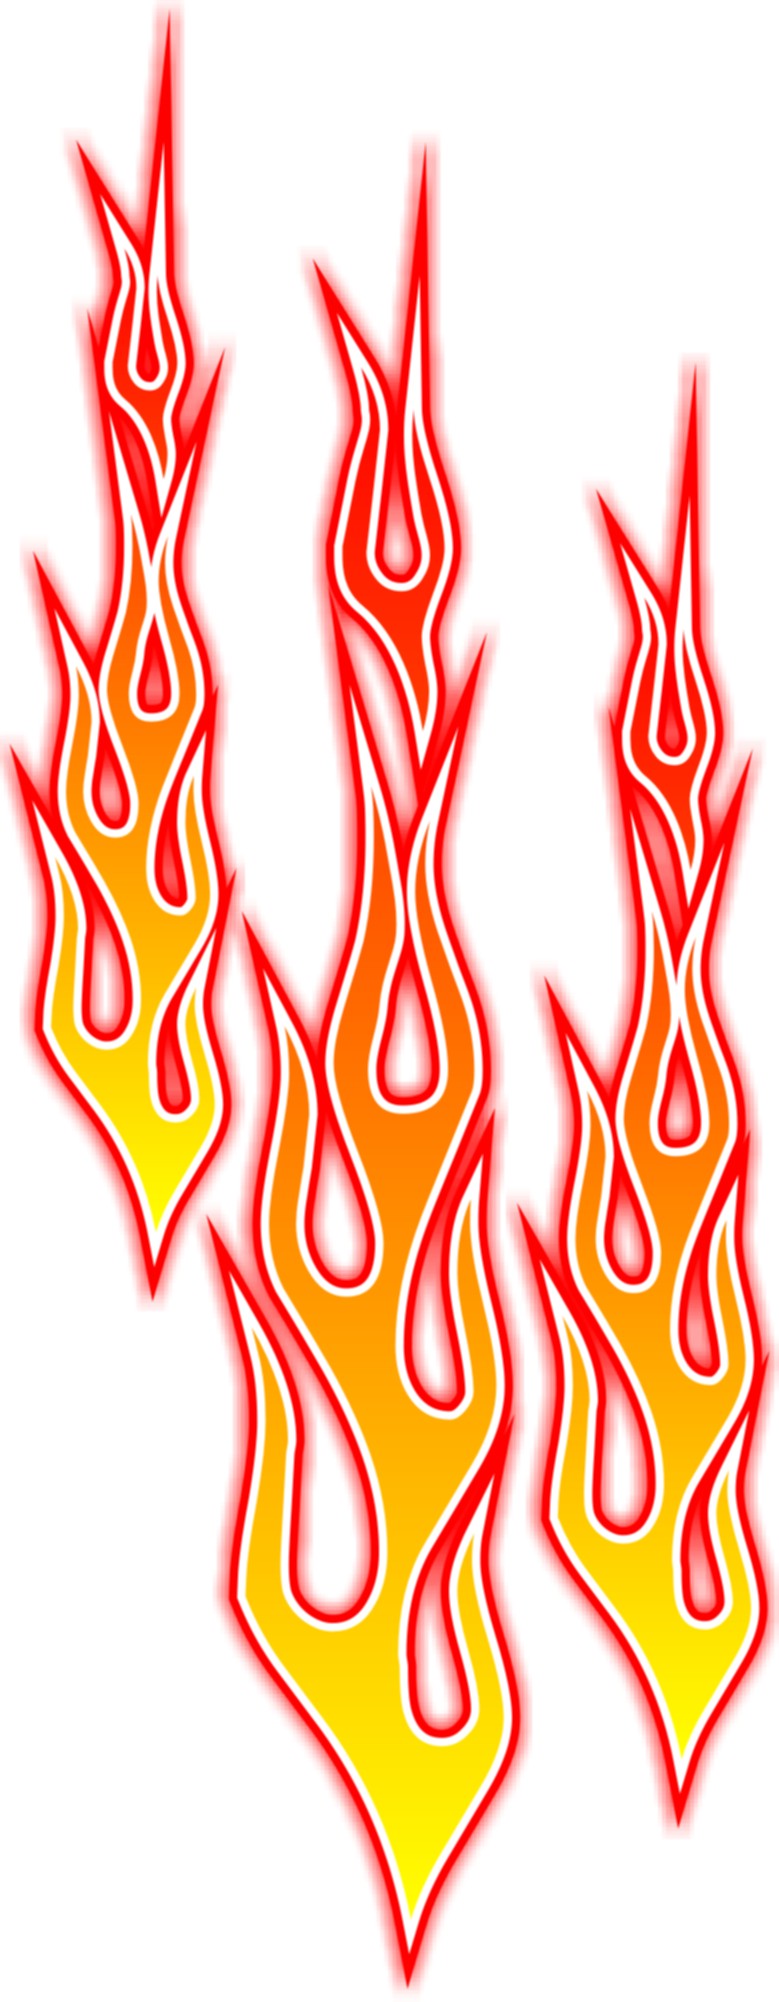 Flames flame clip art vector flame graphics image 4 - Clipartix